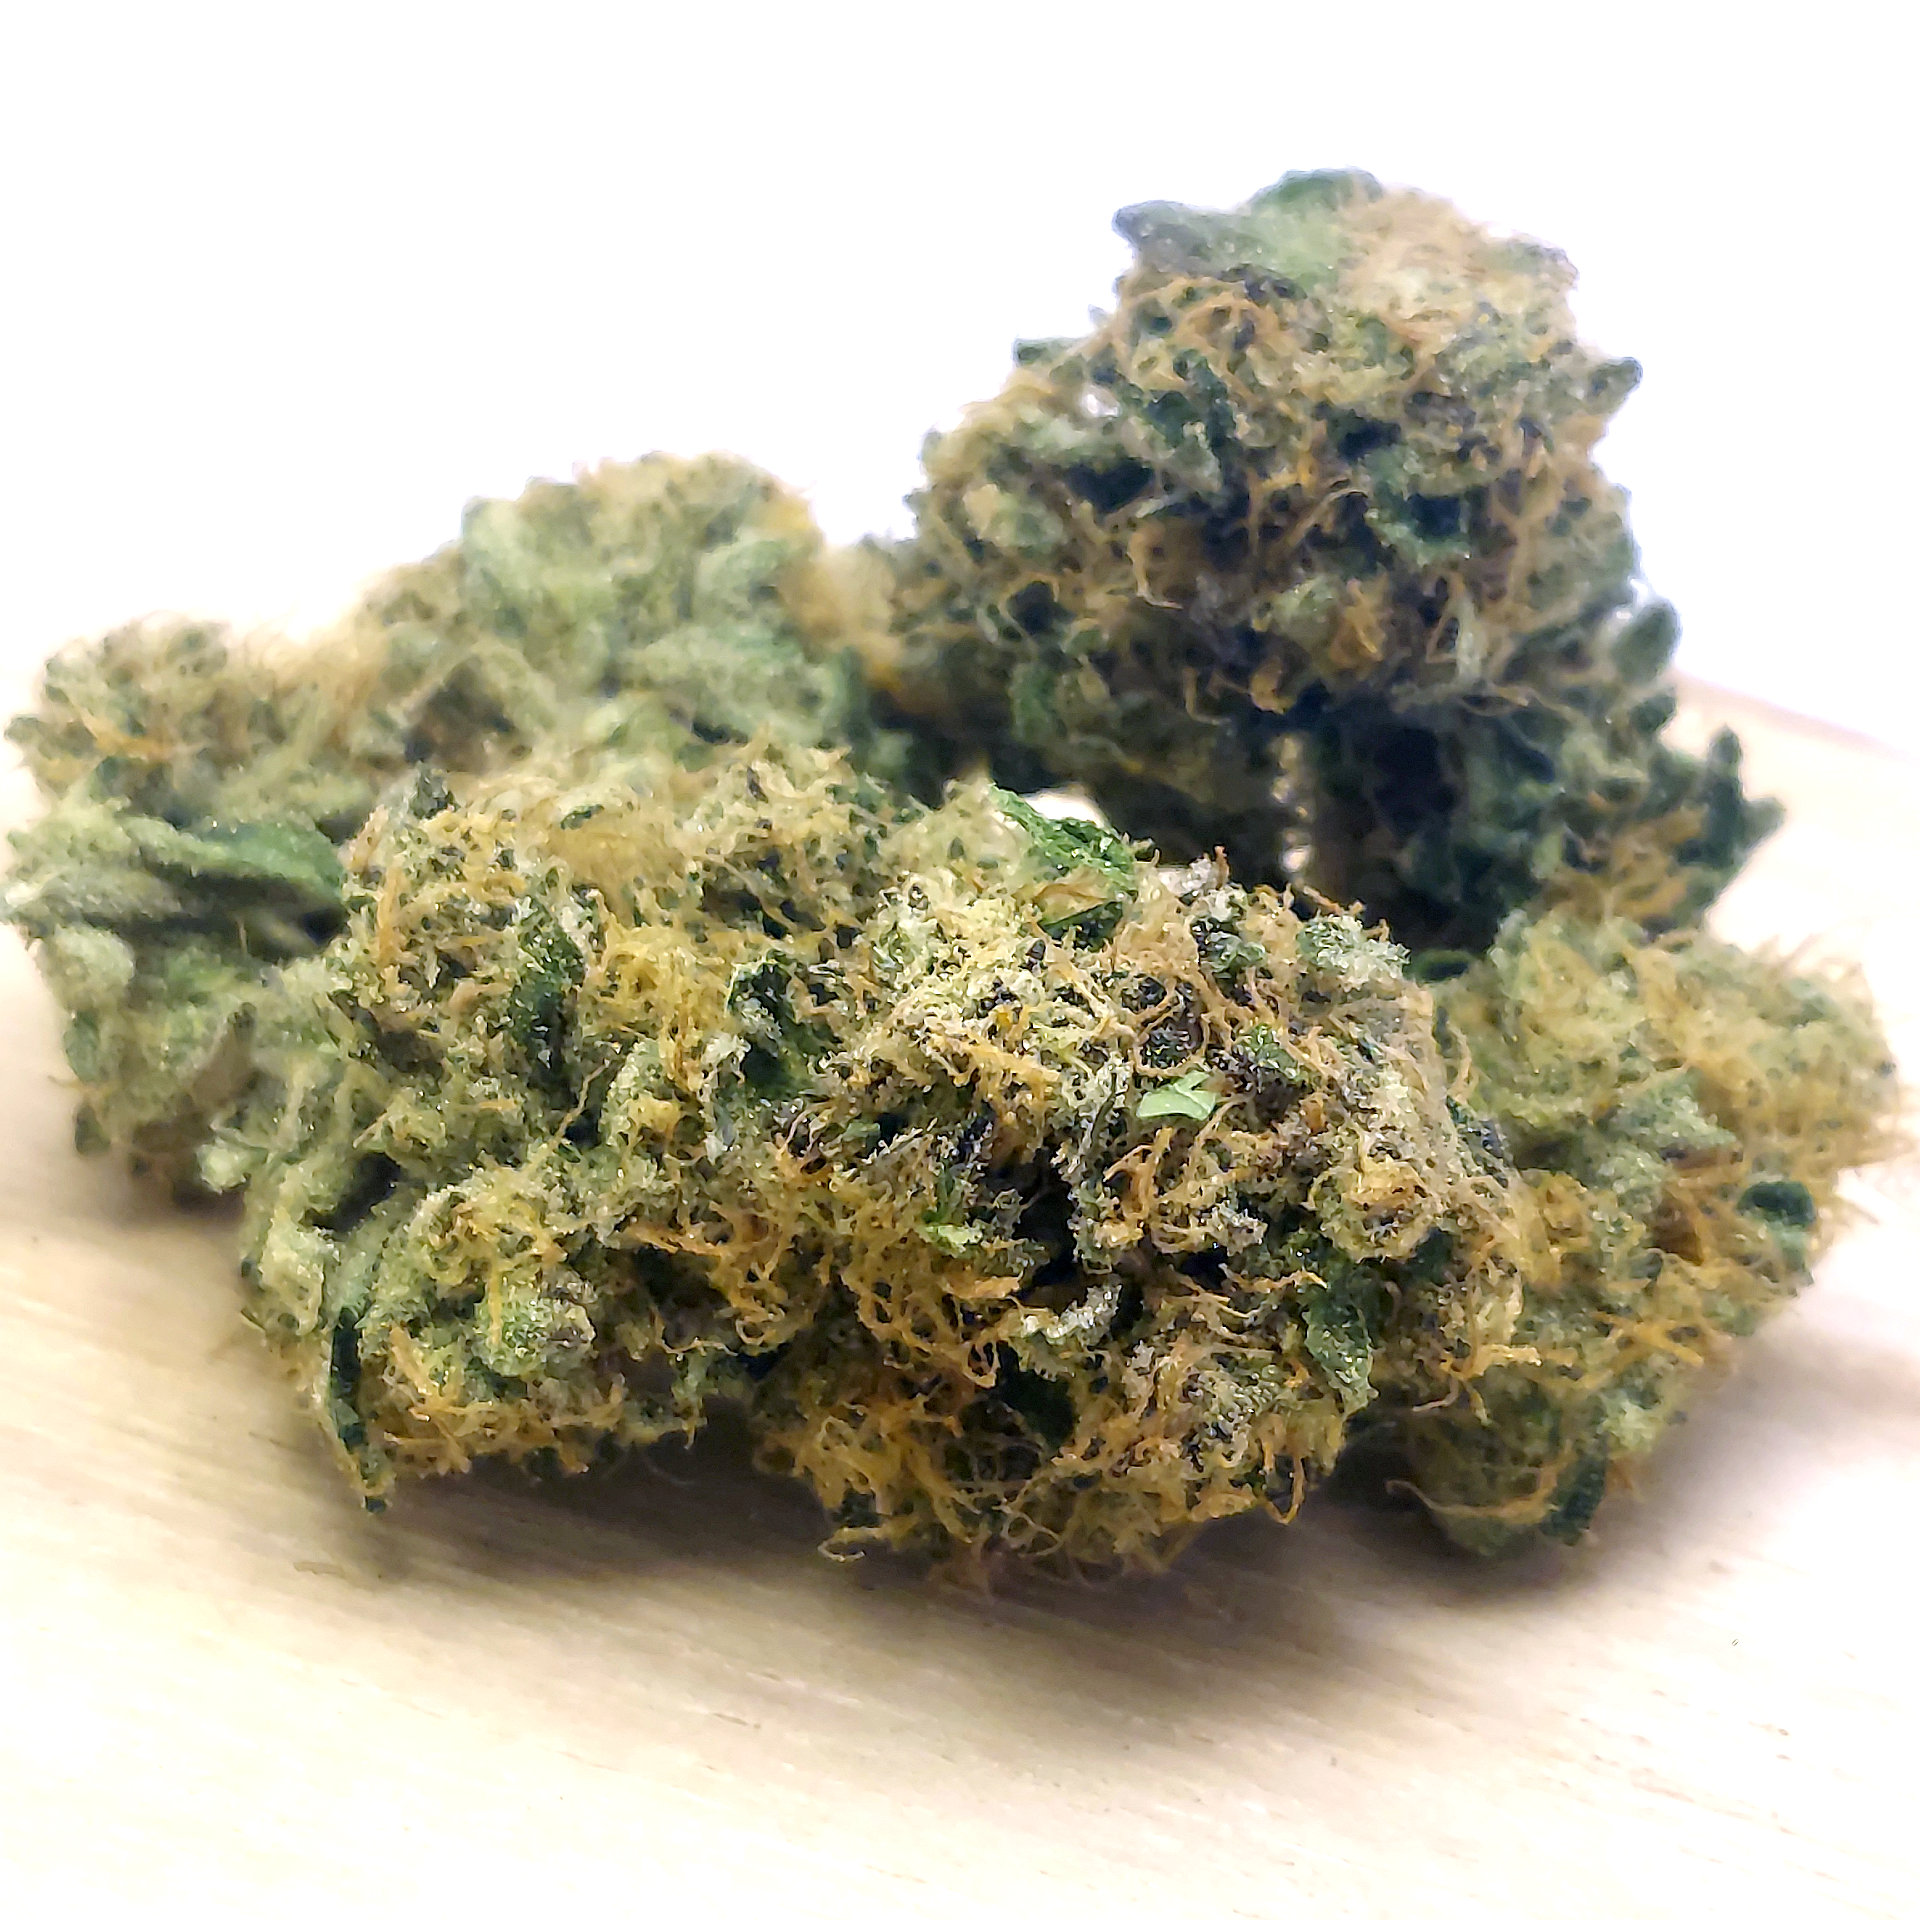 A closeup photo of cannabis buds of the strain Strawberry Cheesecake, grown by Lukas Greene. Photo credit: Lukas Greene